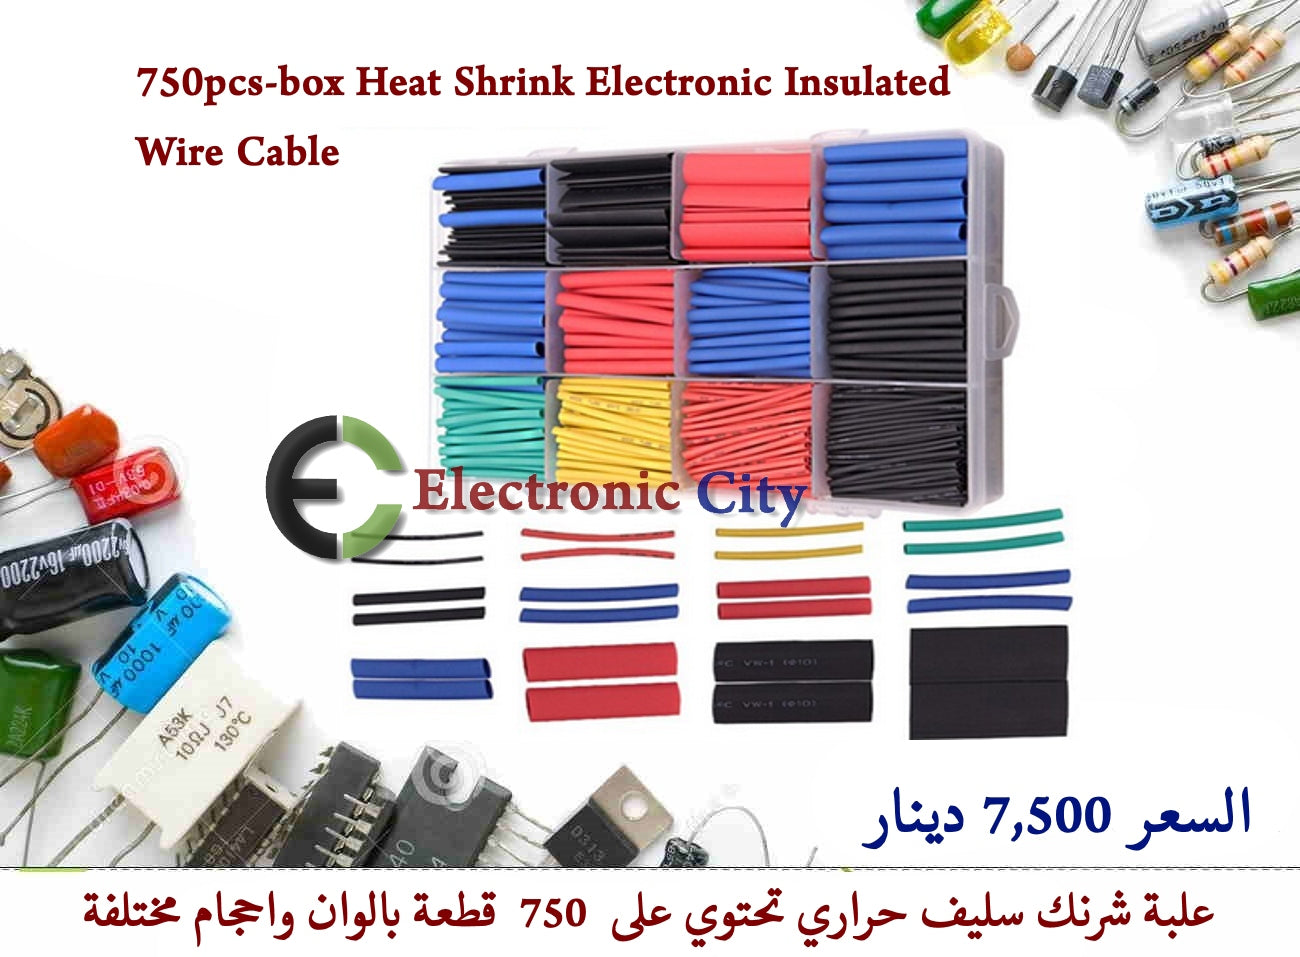 750pcs-box Heat Shrink Electronic Insulated Wire Cable Y-JL0113A  كت شرنك سليف مكون من 750 قطعة بالوان واحجام مختلفة   يتوفر بسعر 7,500 دينار